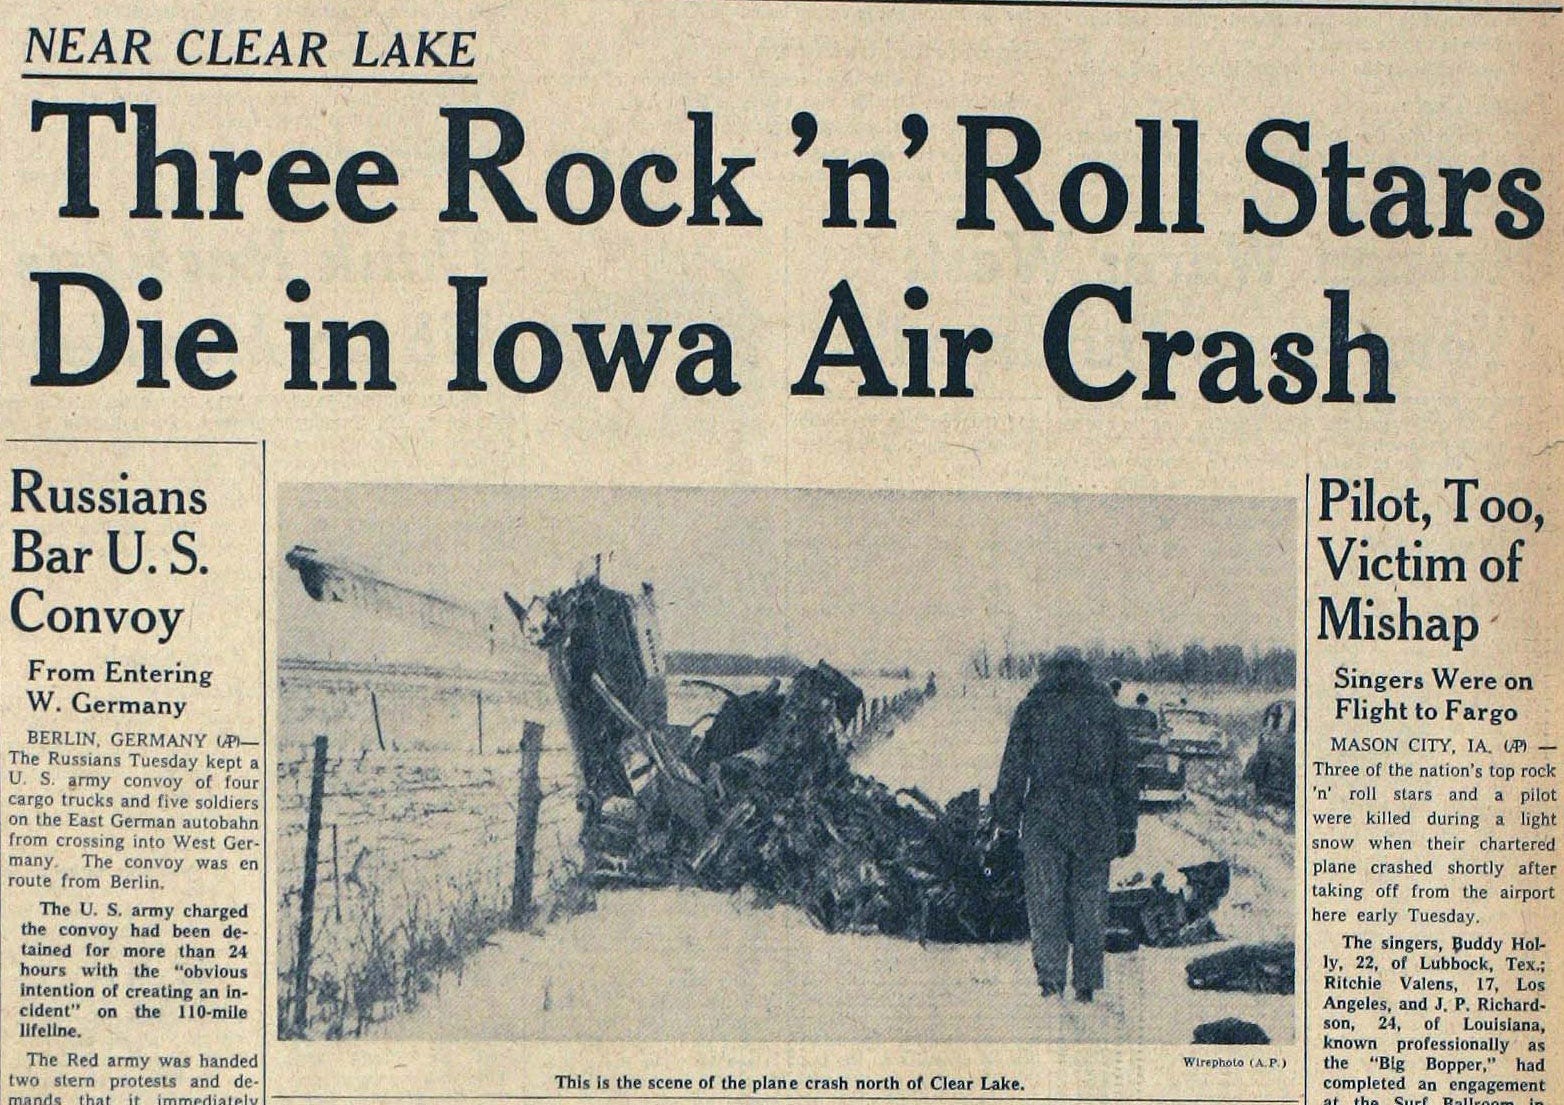 Buddy Holly Ritchie Valens Plane Crash